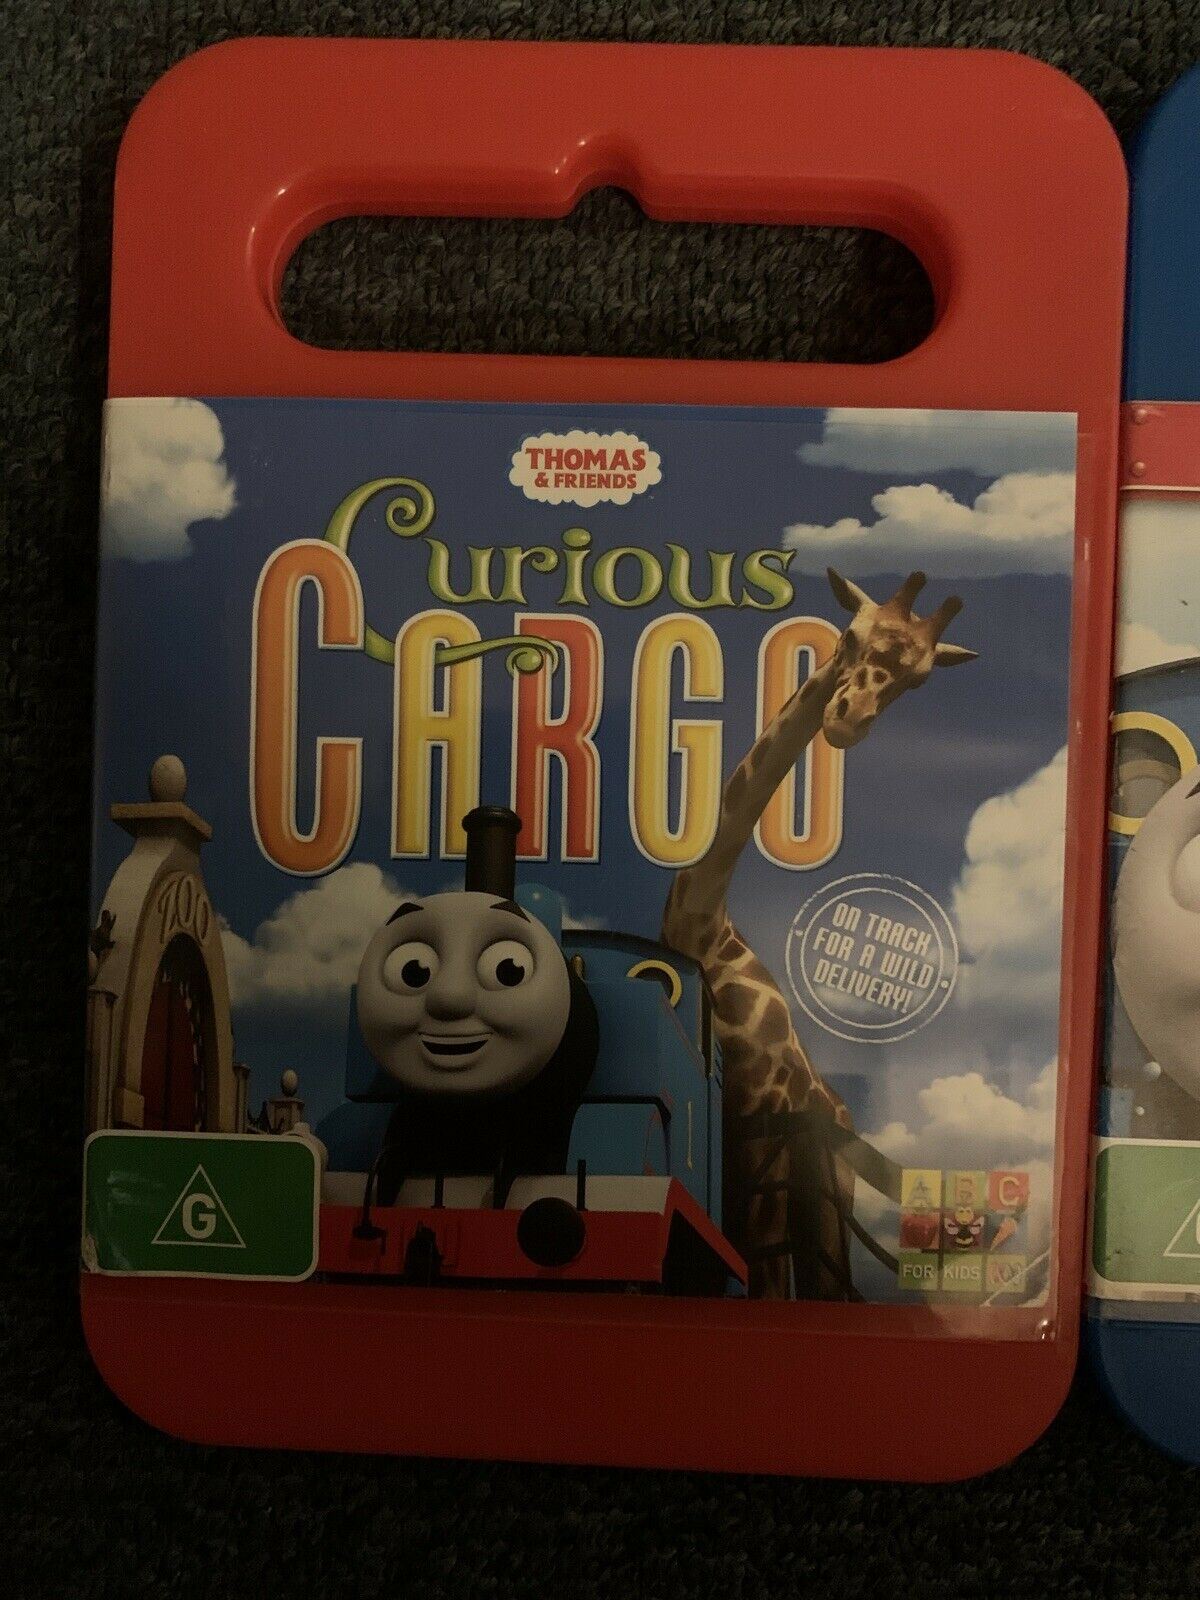 3x Thomas & Friends DVD - Curious Cargo Splish, Splash, Splosh! Party Surprise